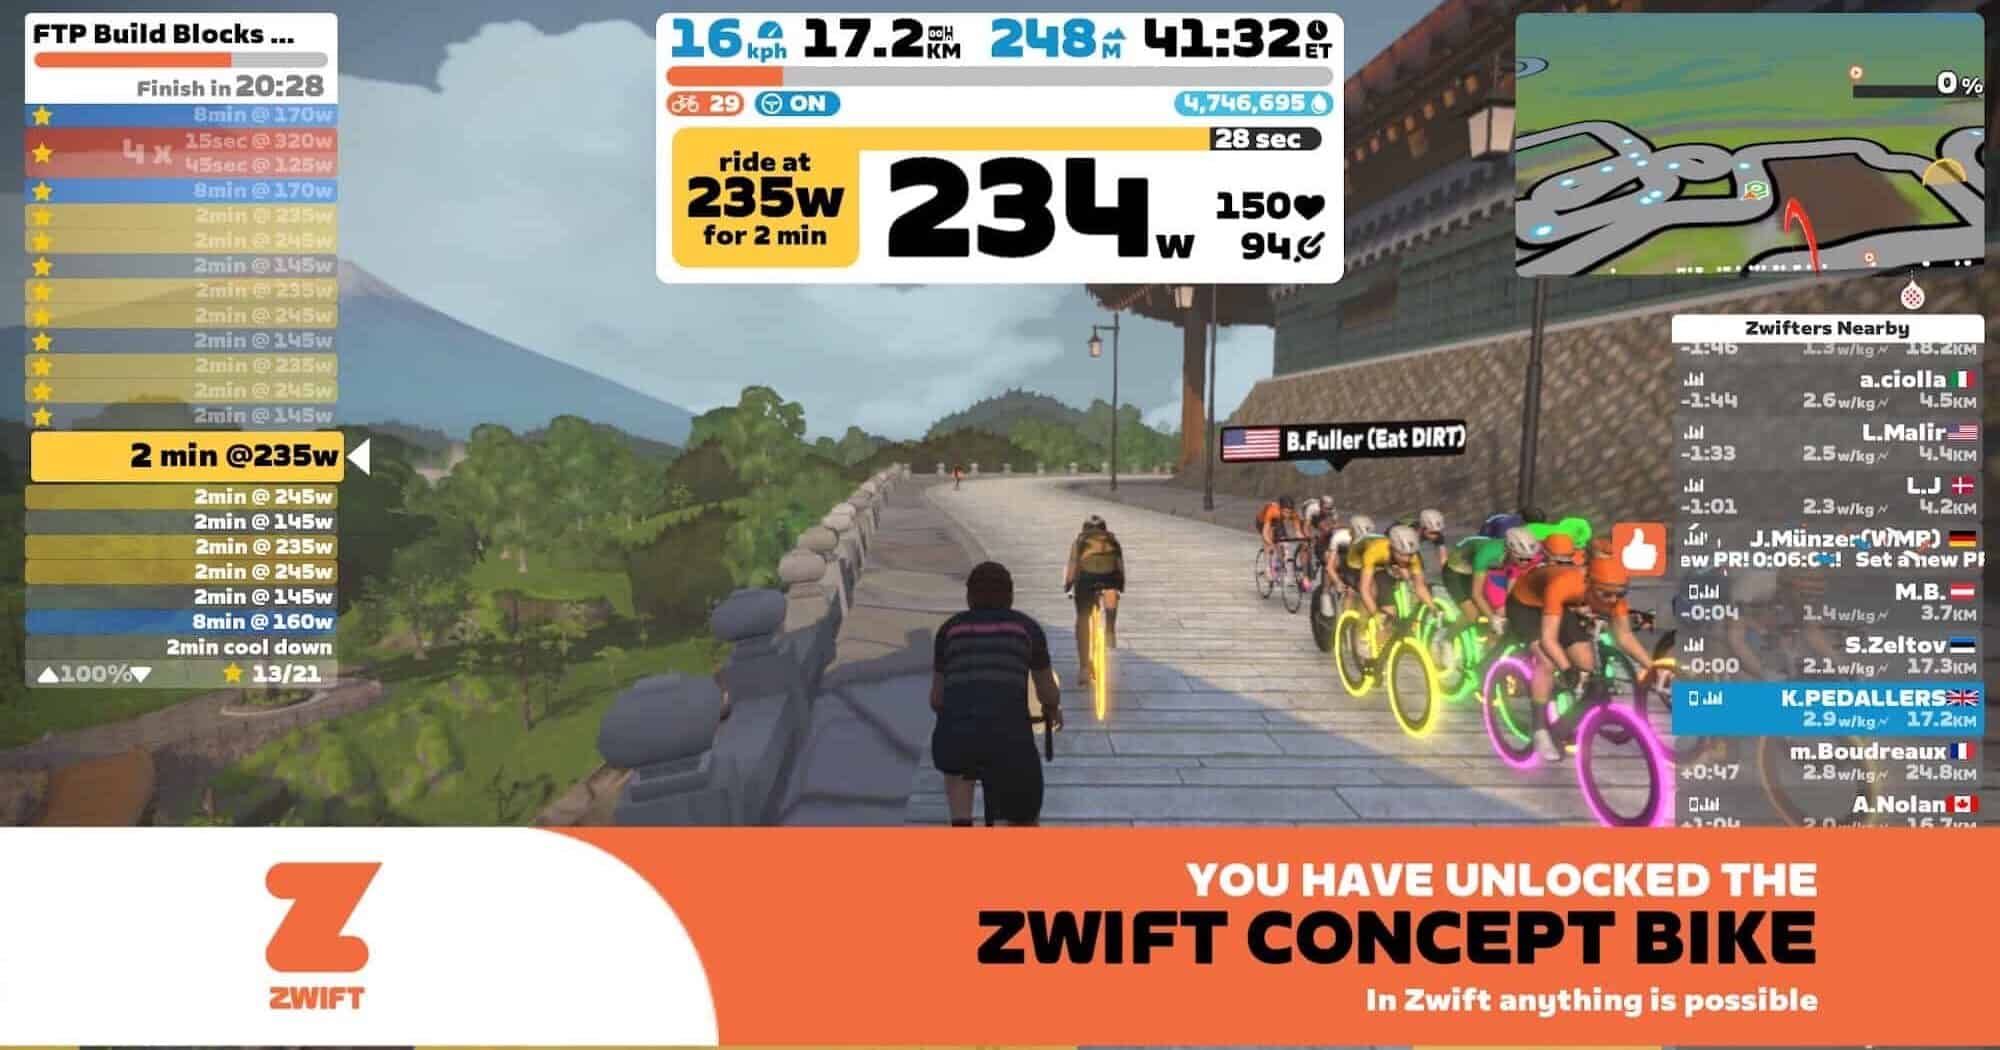 cropped zwift tron bike unlock challenge completed banner.jpg